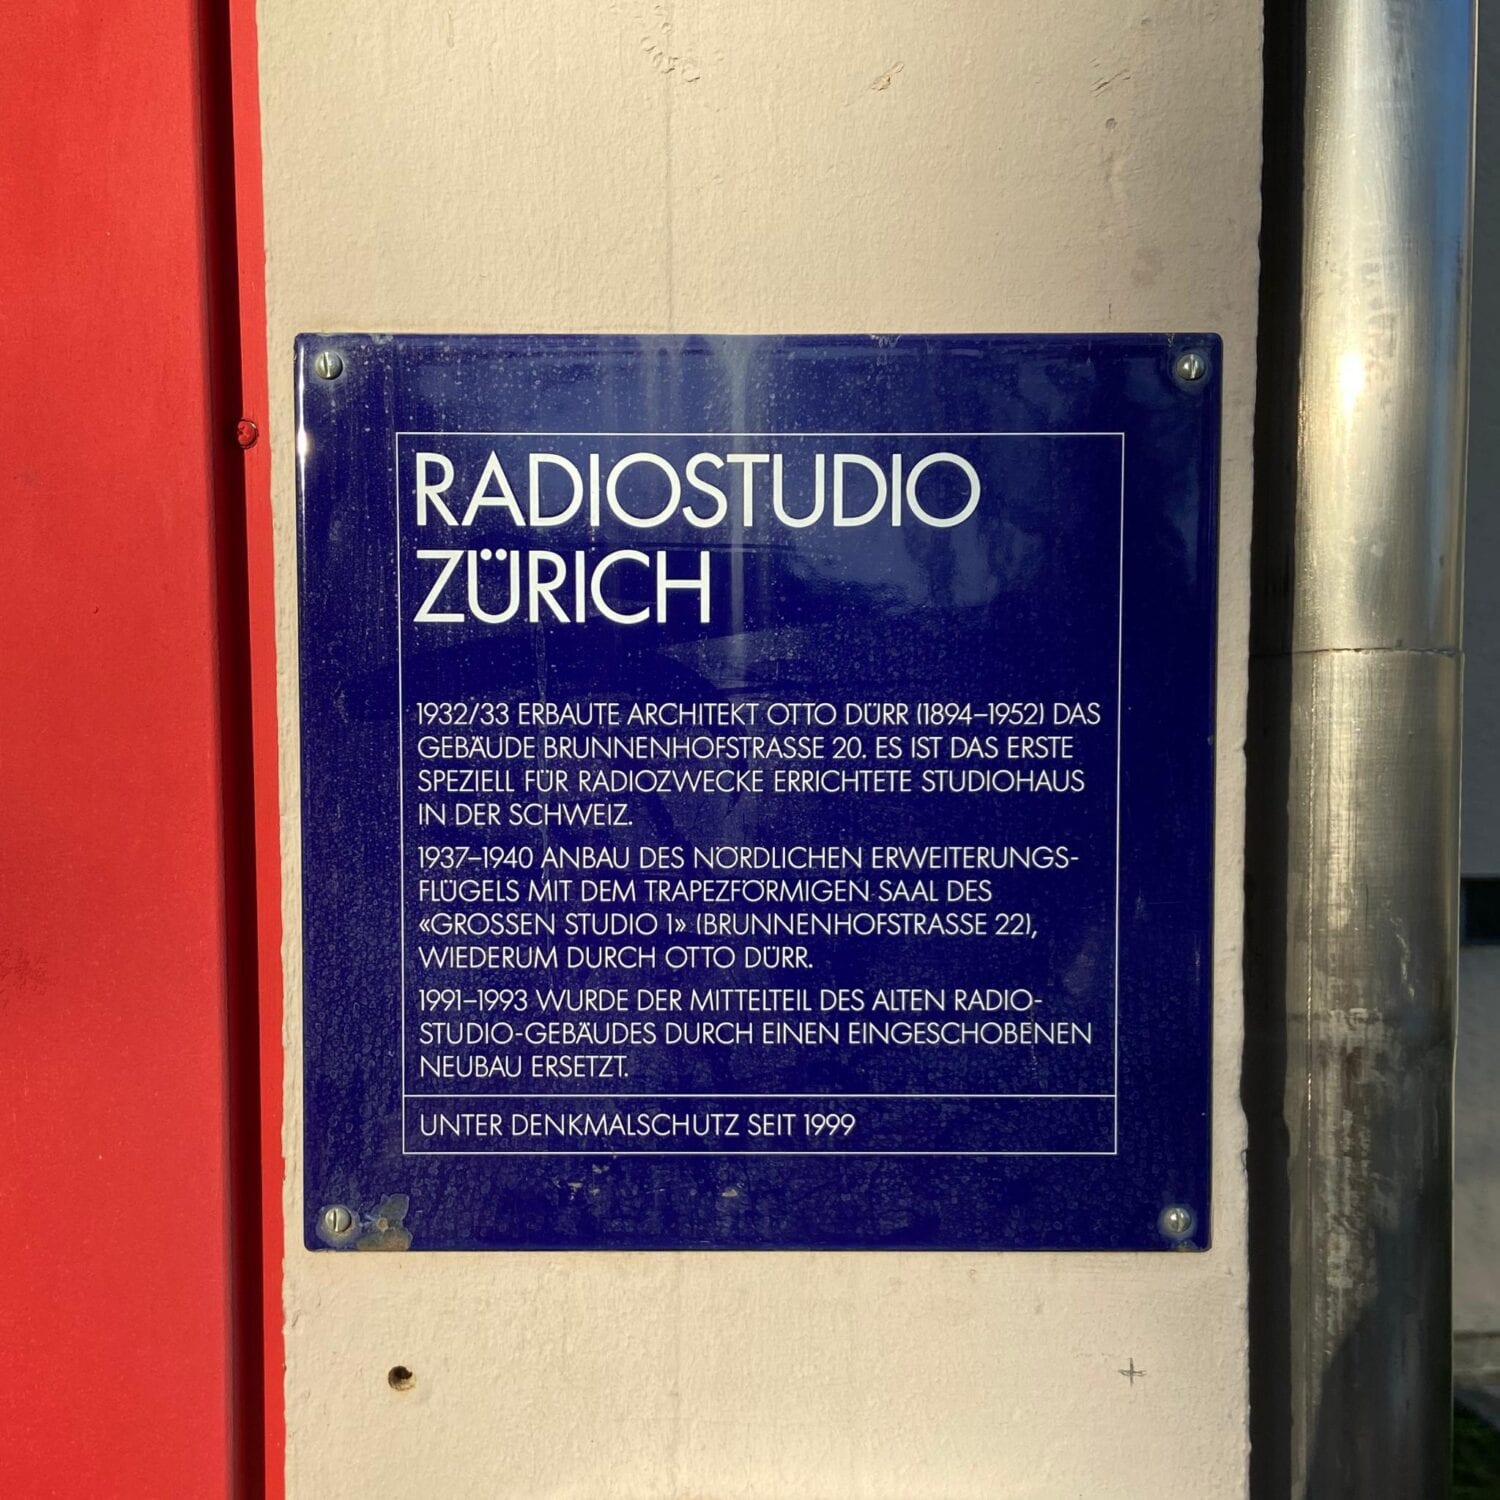 Radiostudio